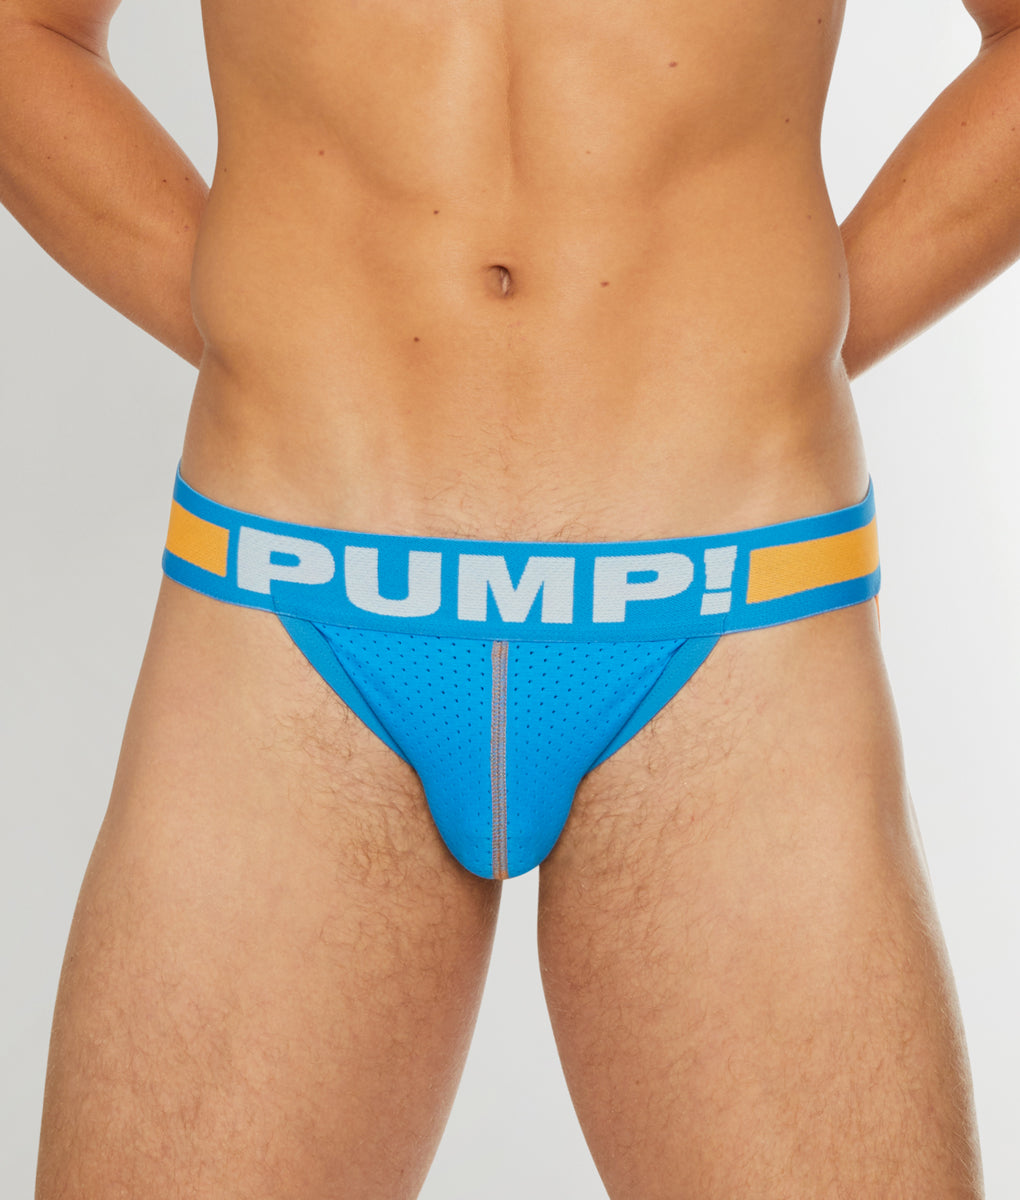 PUMP! Cruise Jockstrap - Underwear Expert